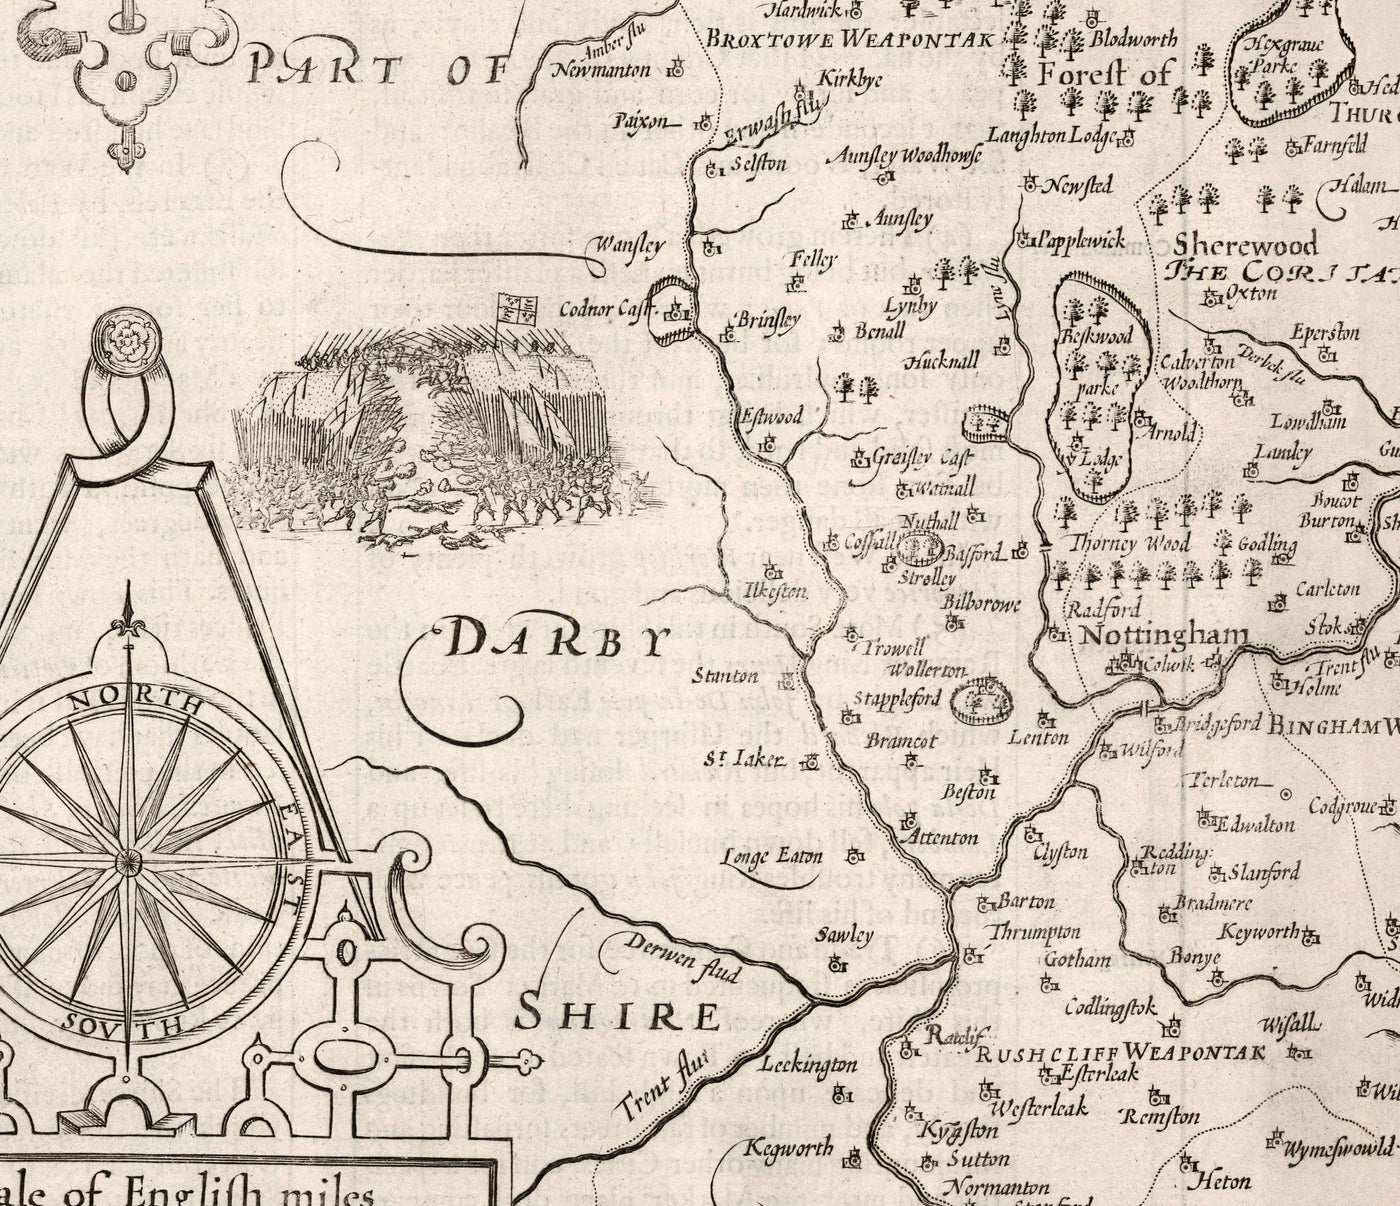 Old Map of Nottinghamshire, 1611 by John Speed - Nottingham, Mansfield, Newark, Worksop, Sherwood Forest